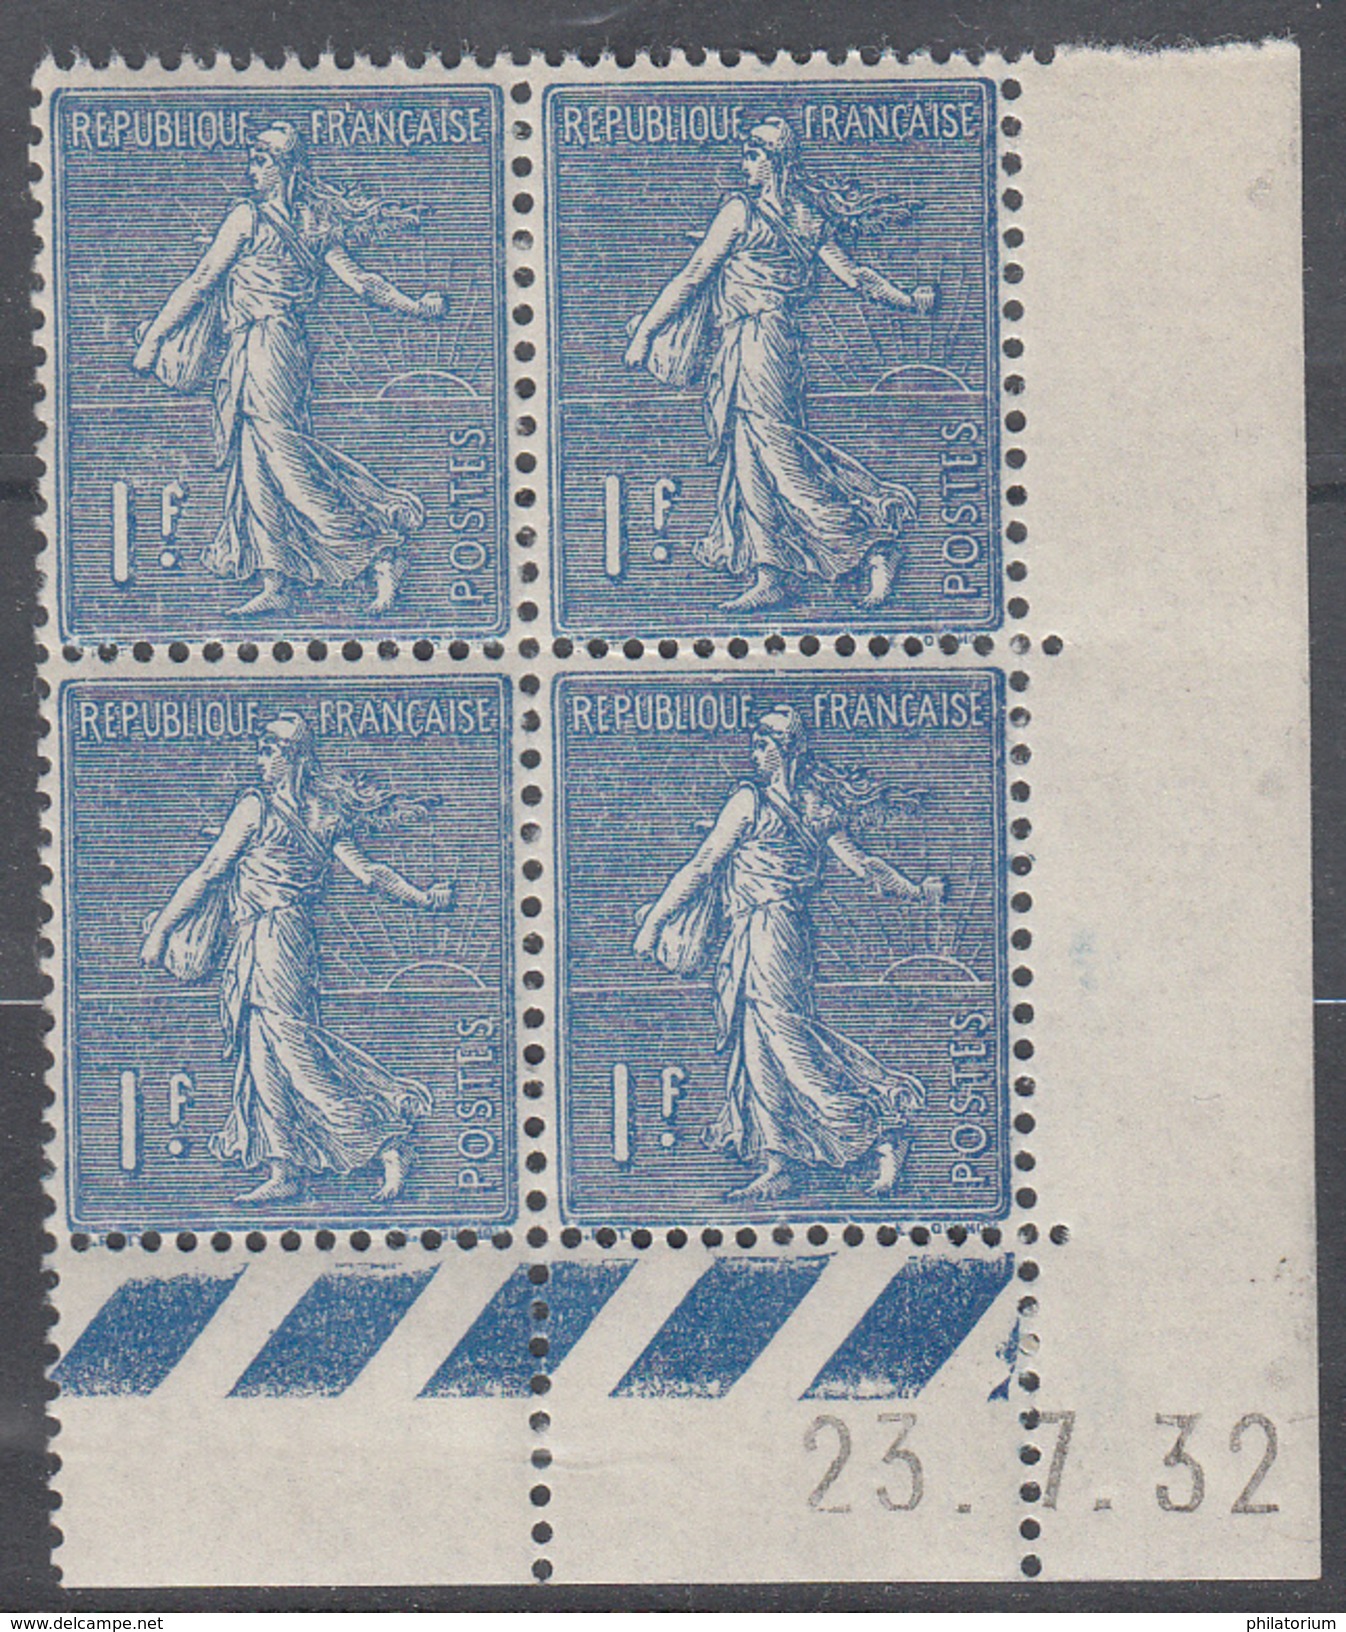 FRANCE  Coin Daté **  Type Semeuse Lignée 1f  Bleu  Yvert 205  23.7.32  Neuf Sans Charnière - 1930-1939